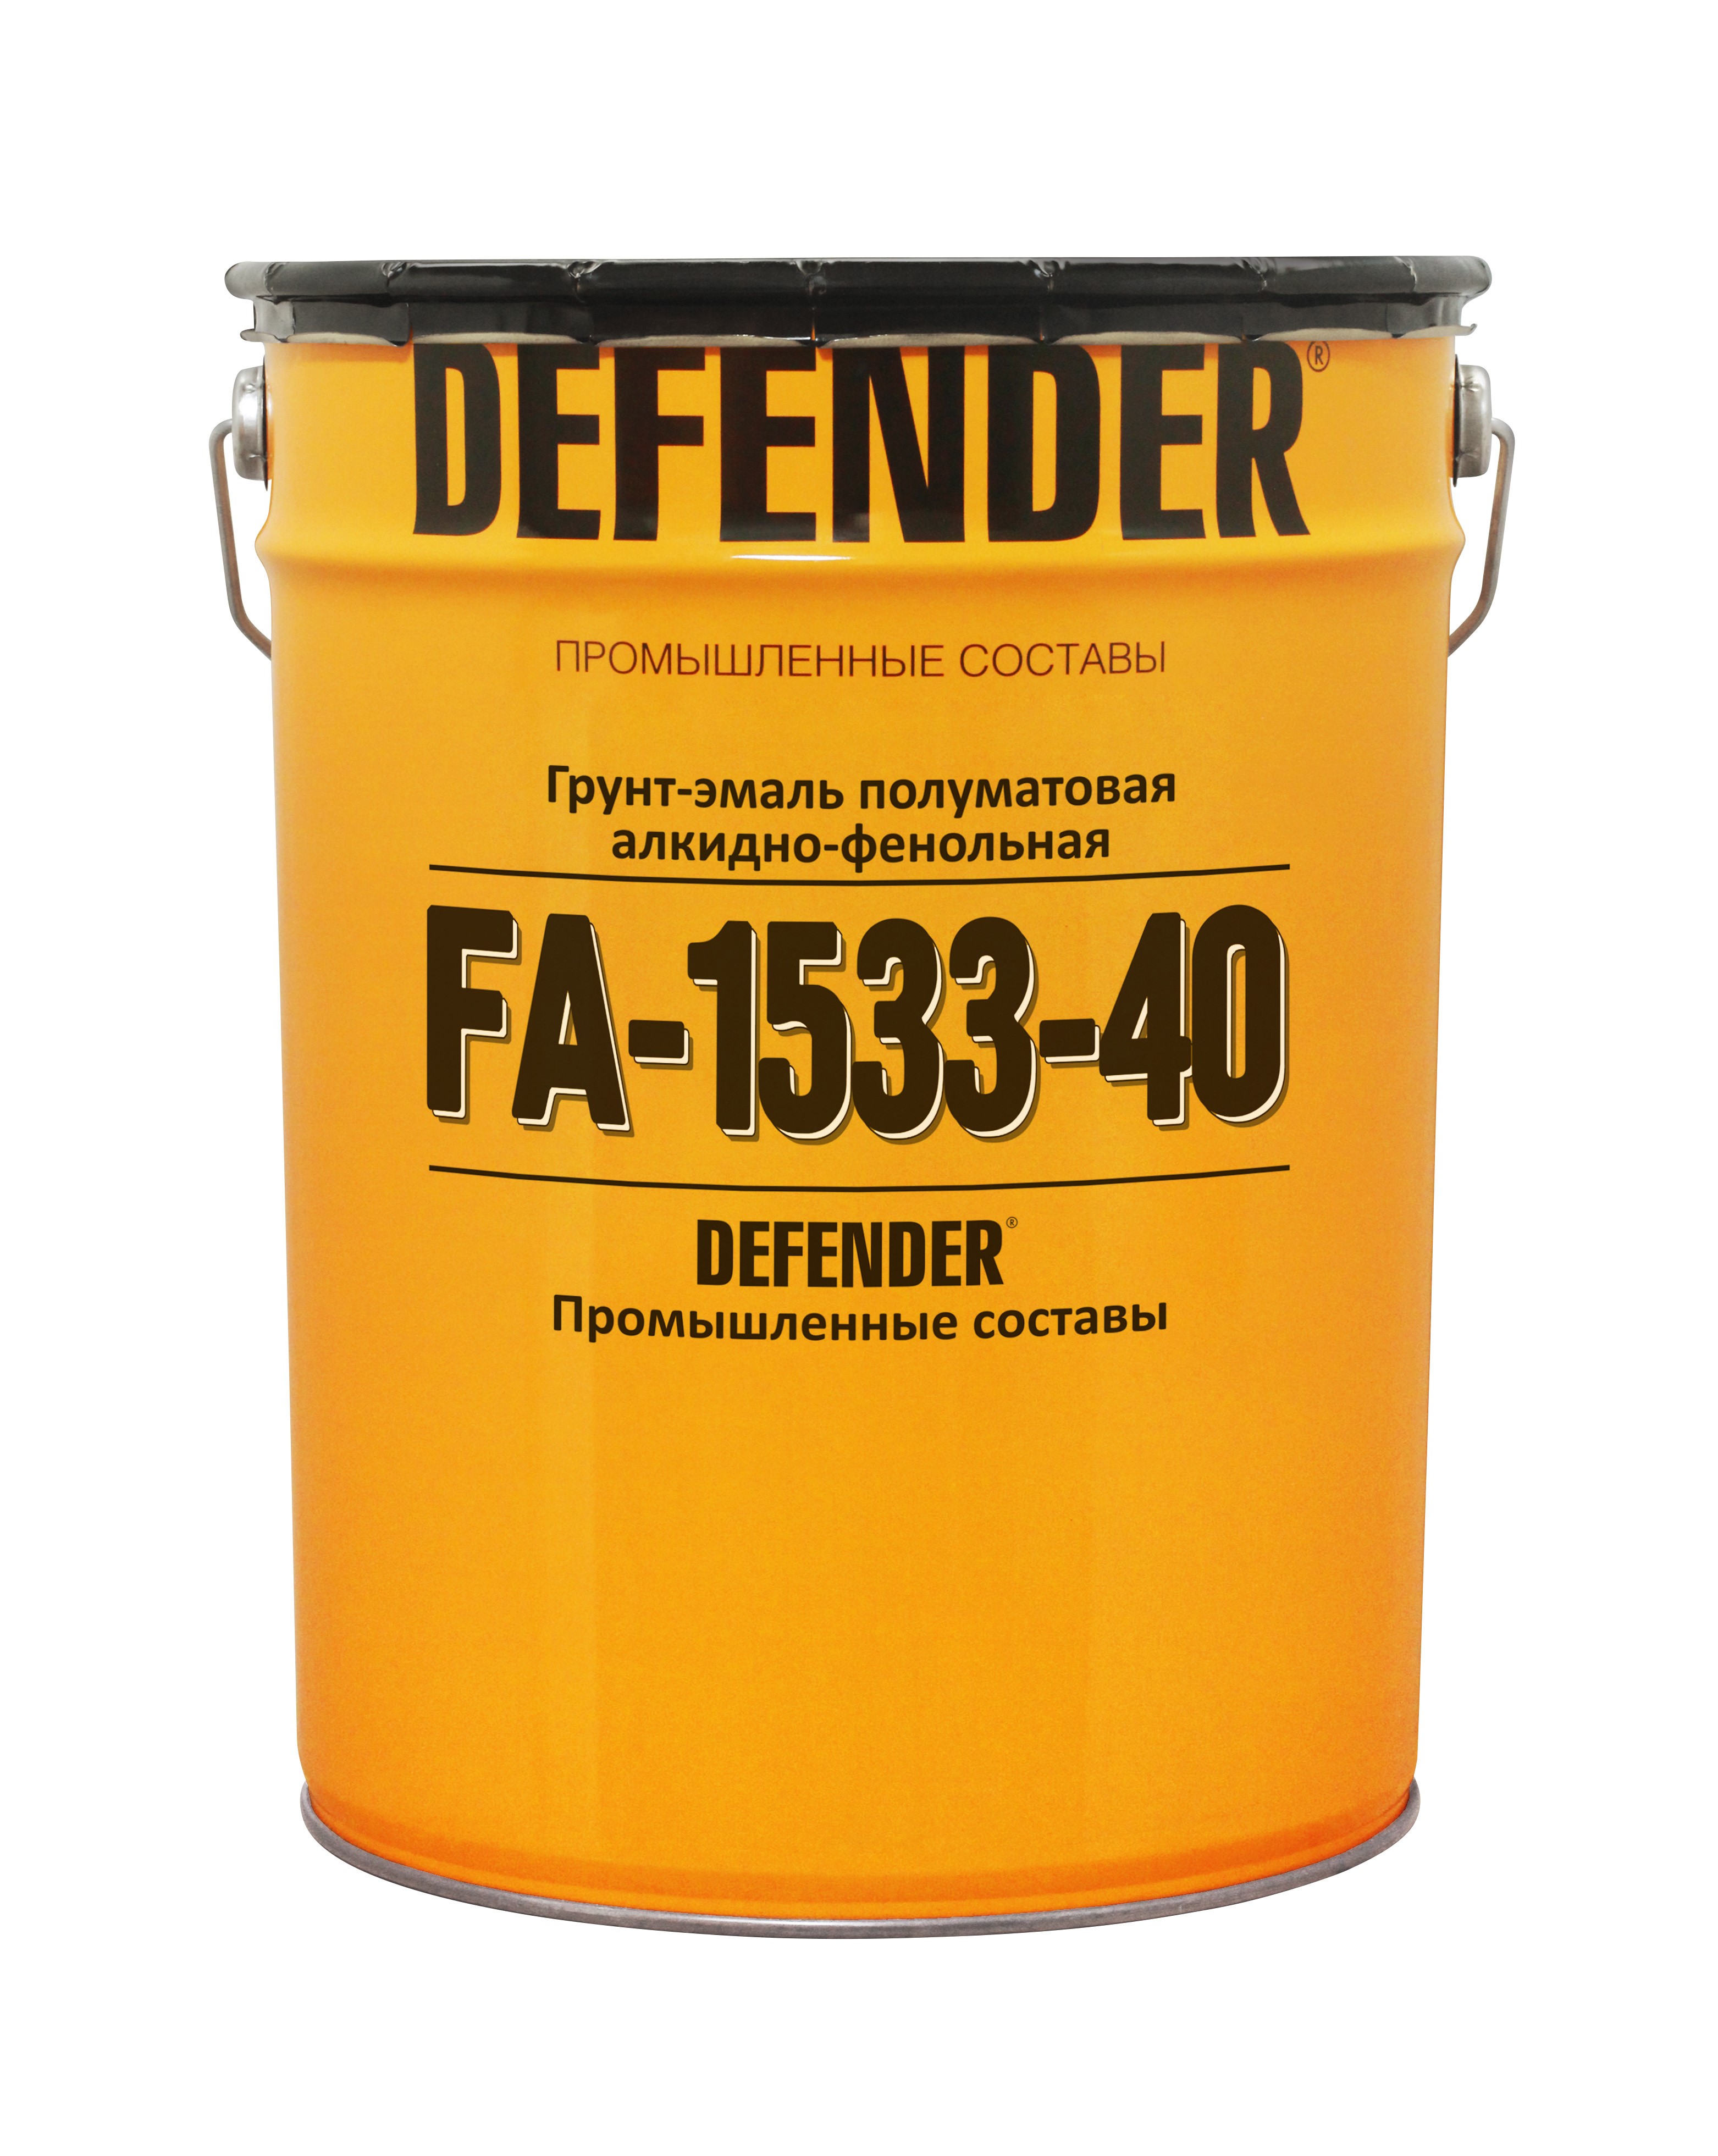 DEFENDER ФА-1533